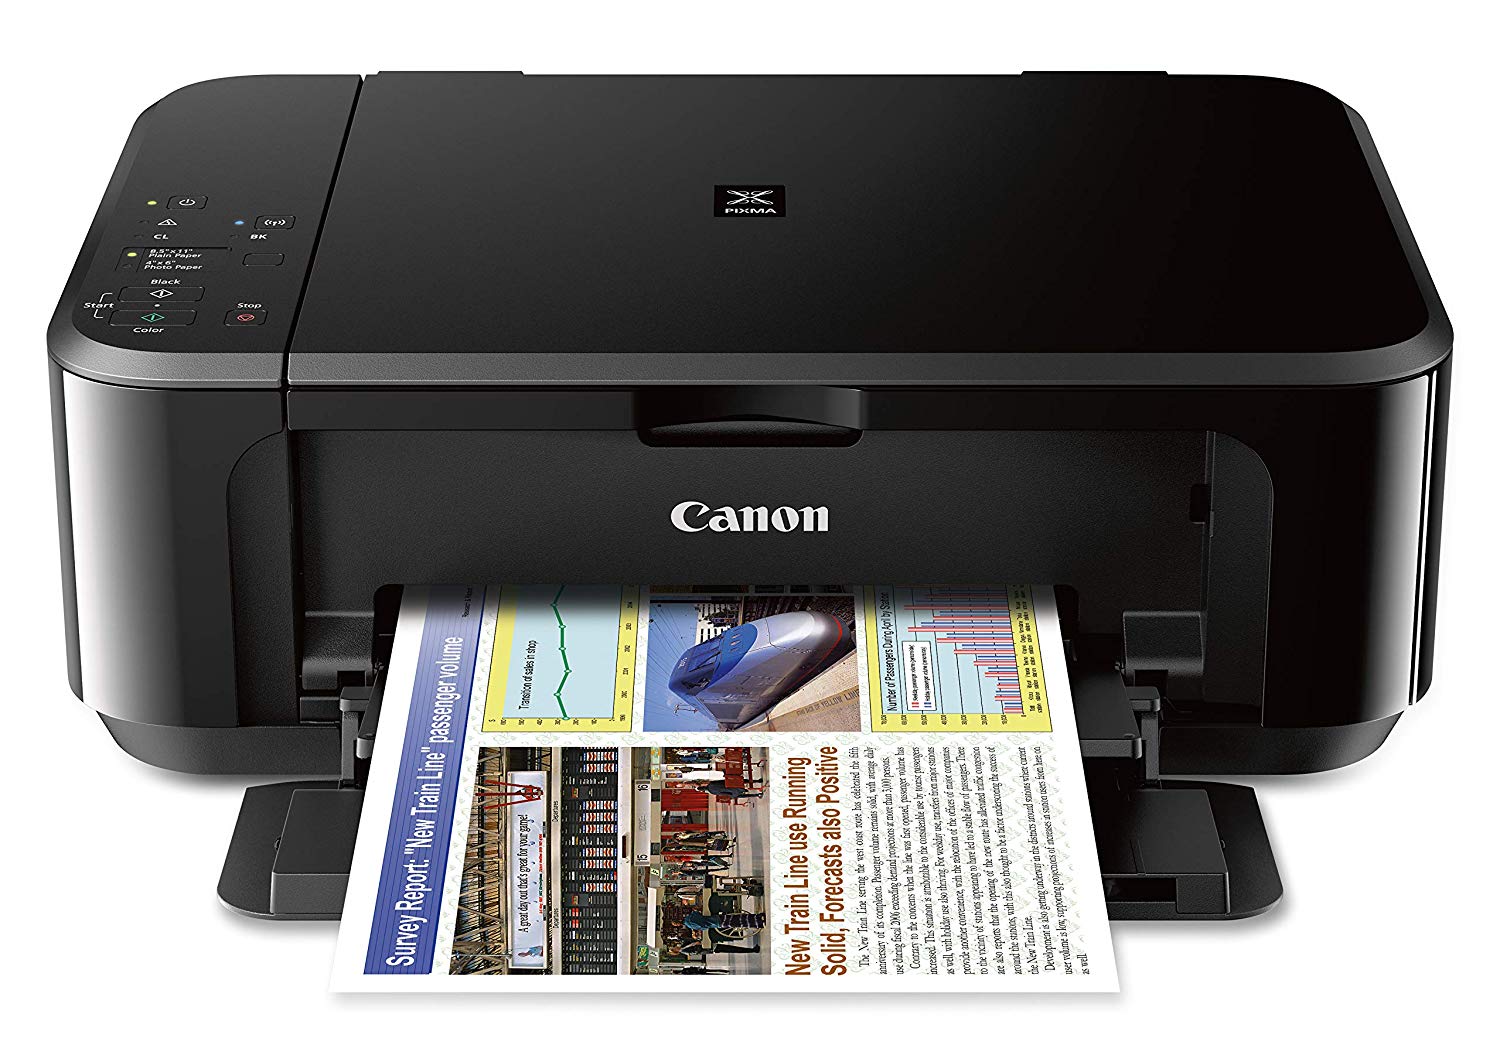 canon printer setup wireless mf4150